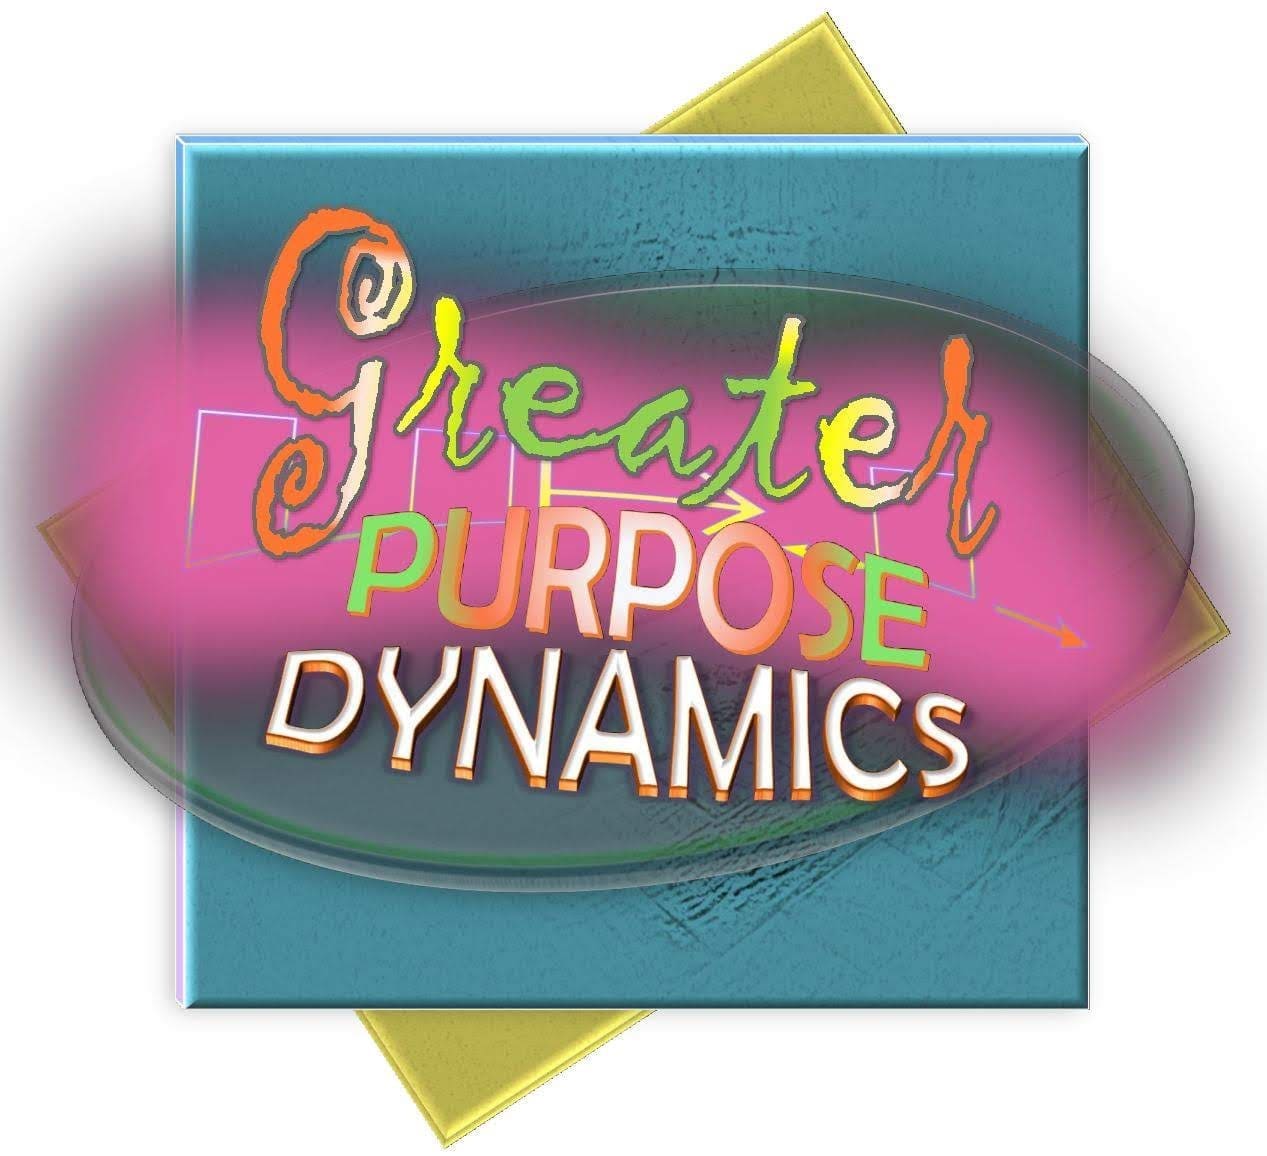 Greater Purpose Dynamics